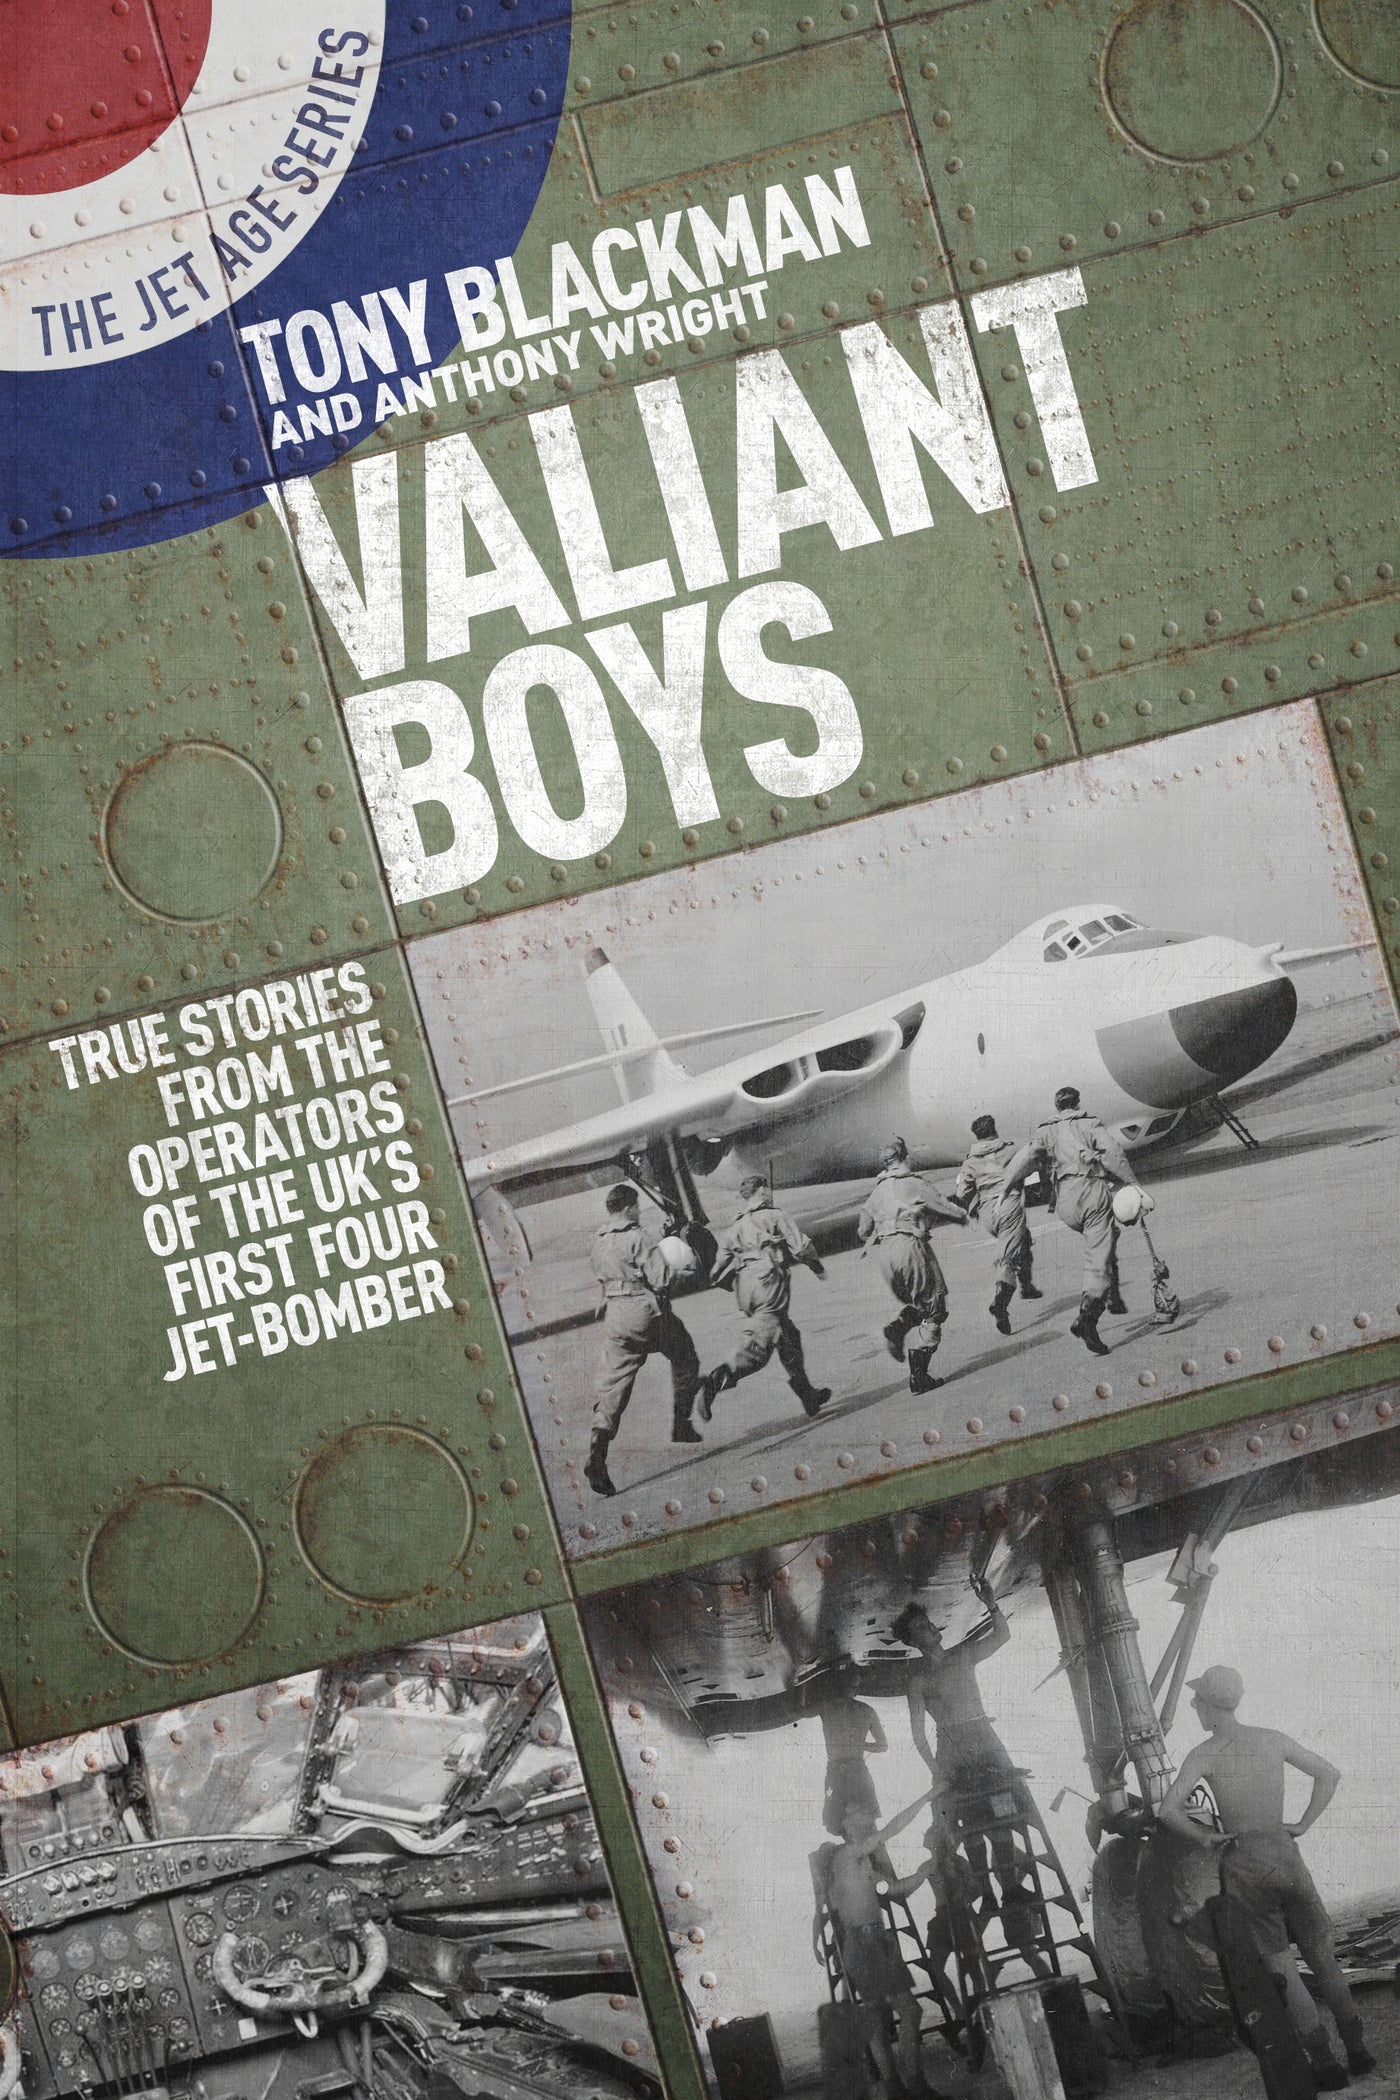 Valiant Boys